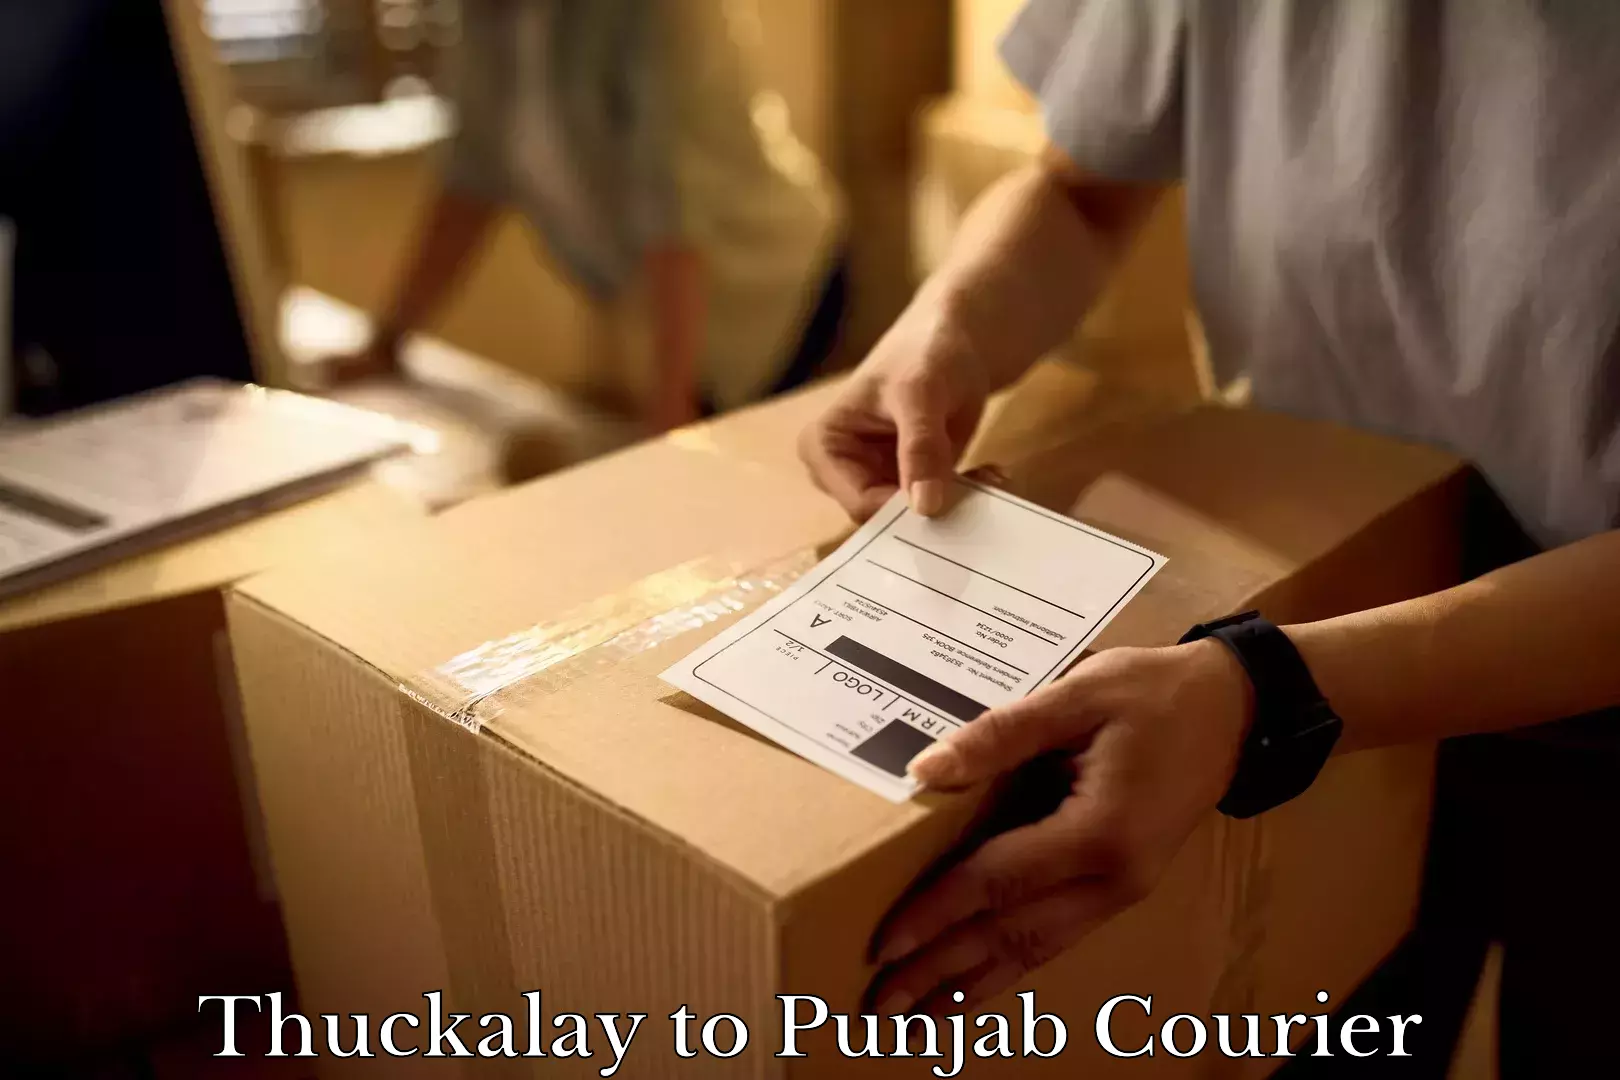 Furniture moving experts Thuckalay to Punjab